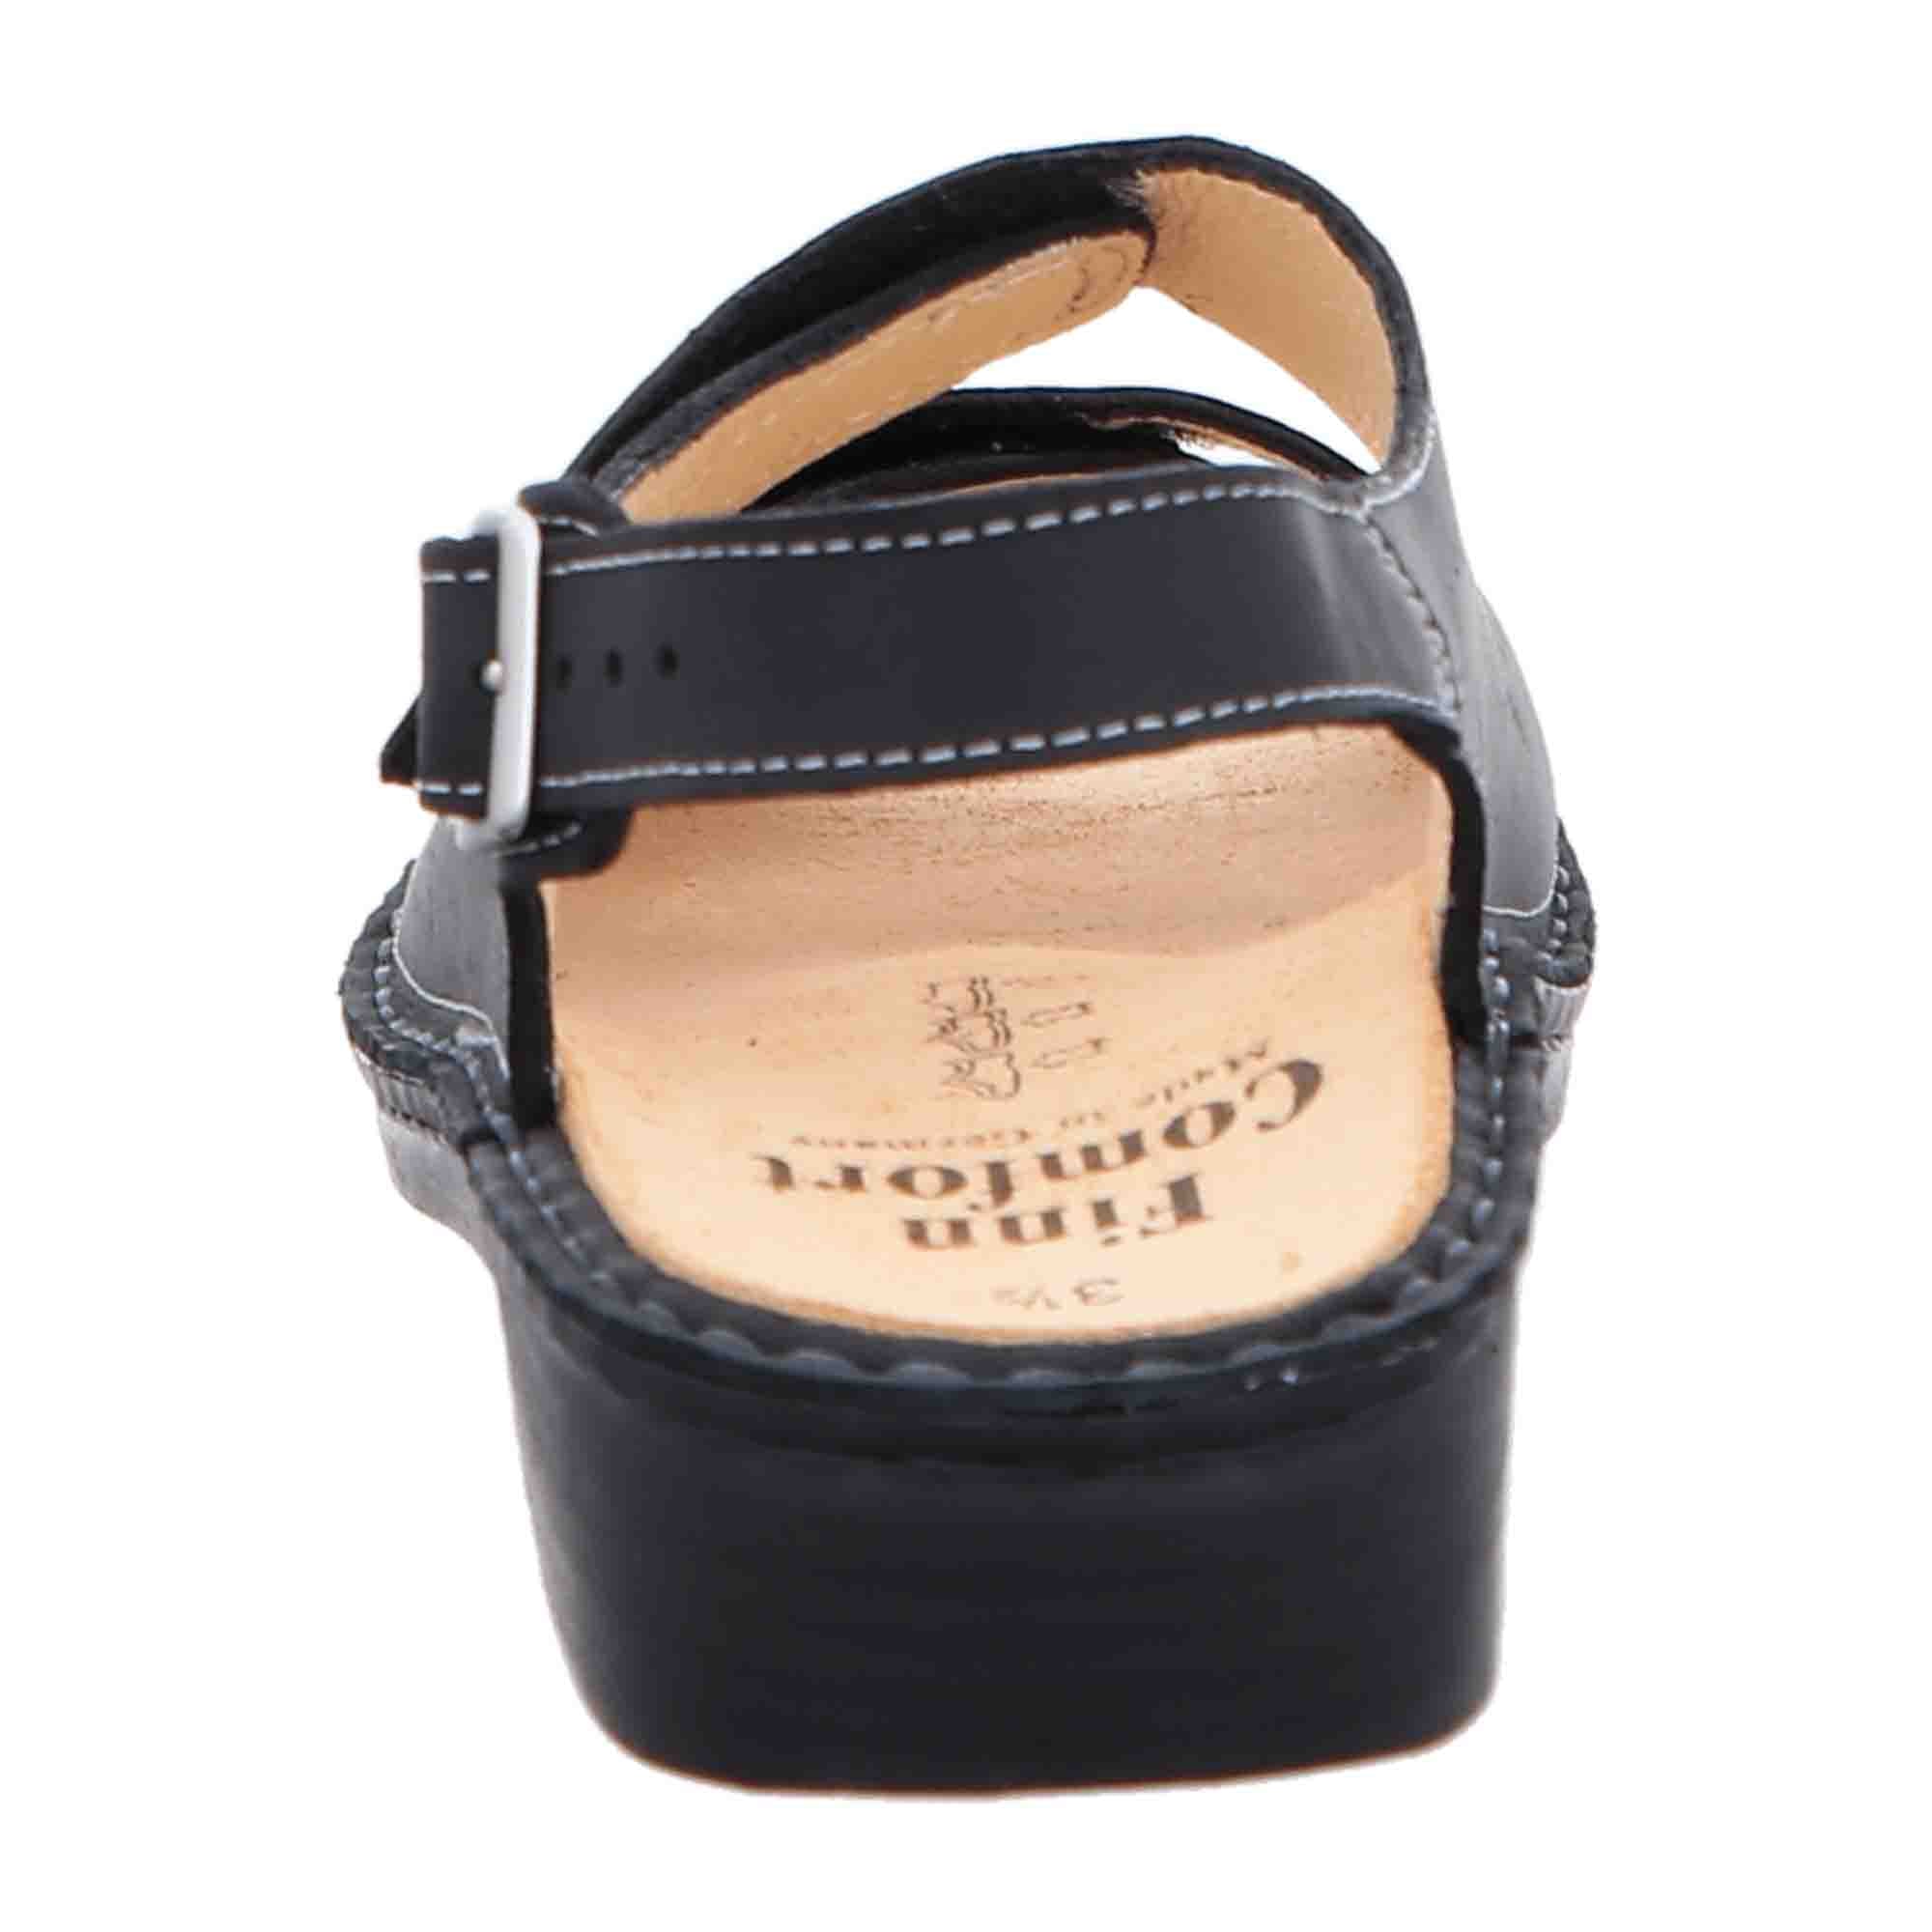 Finn Comfort Tahiti Women's Sandals, Elegant Black Leather - Comfort & Style